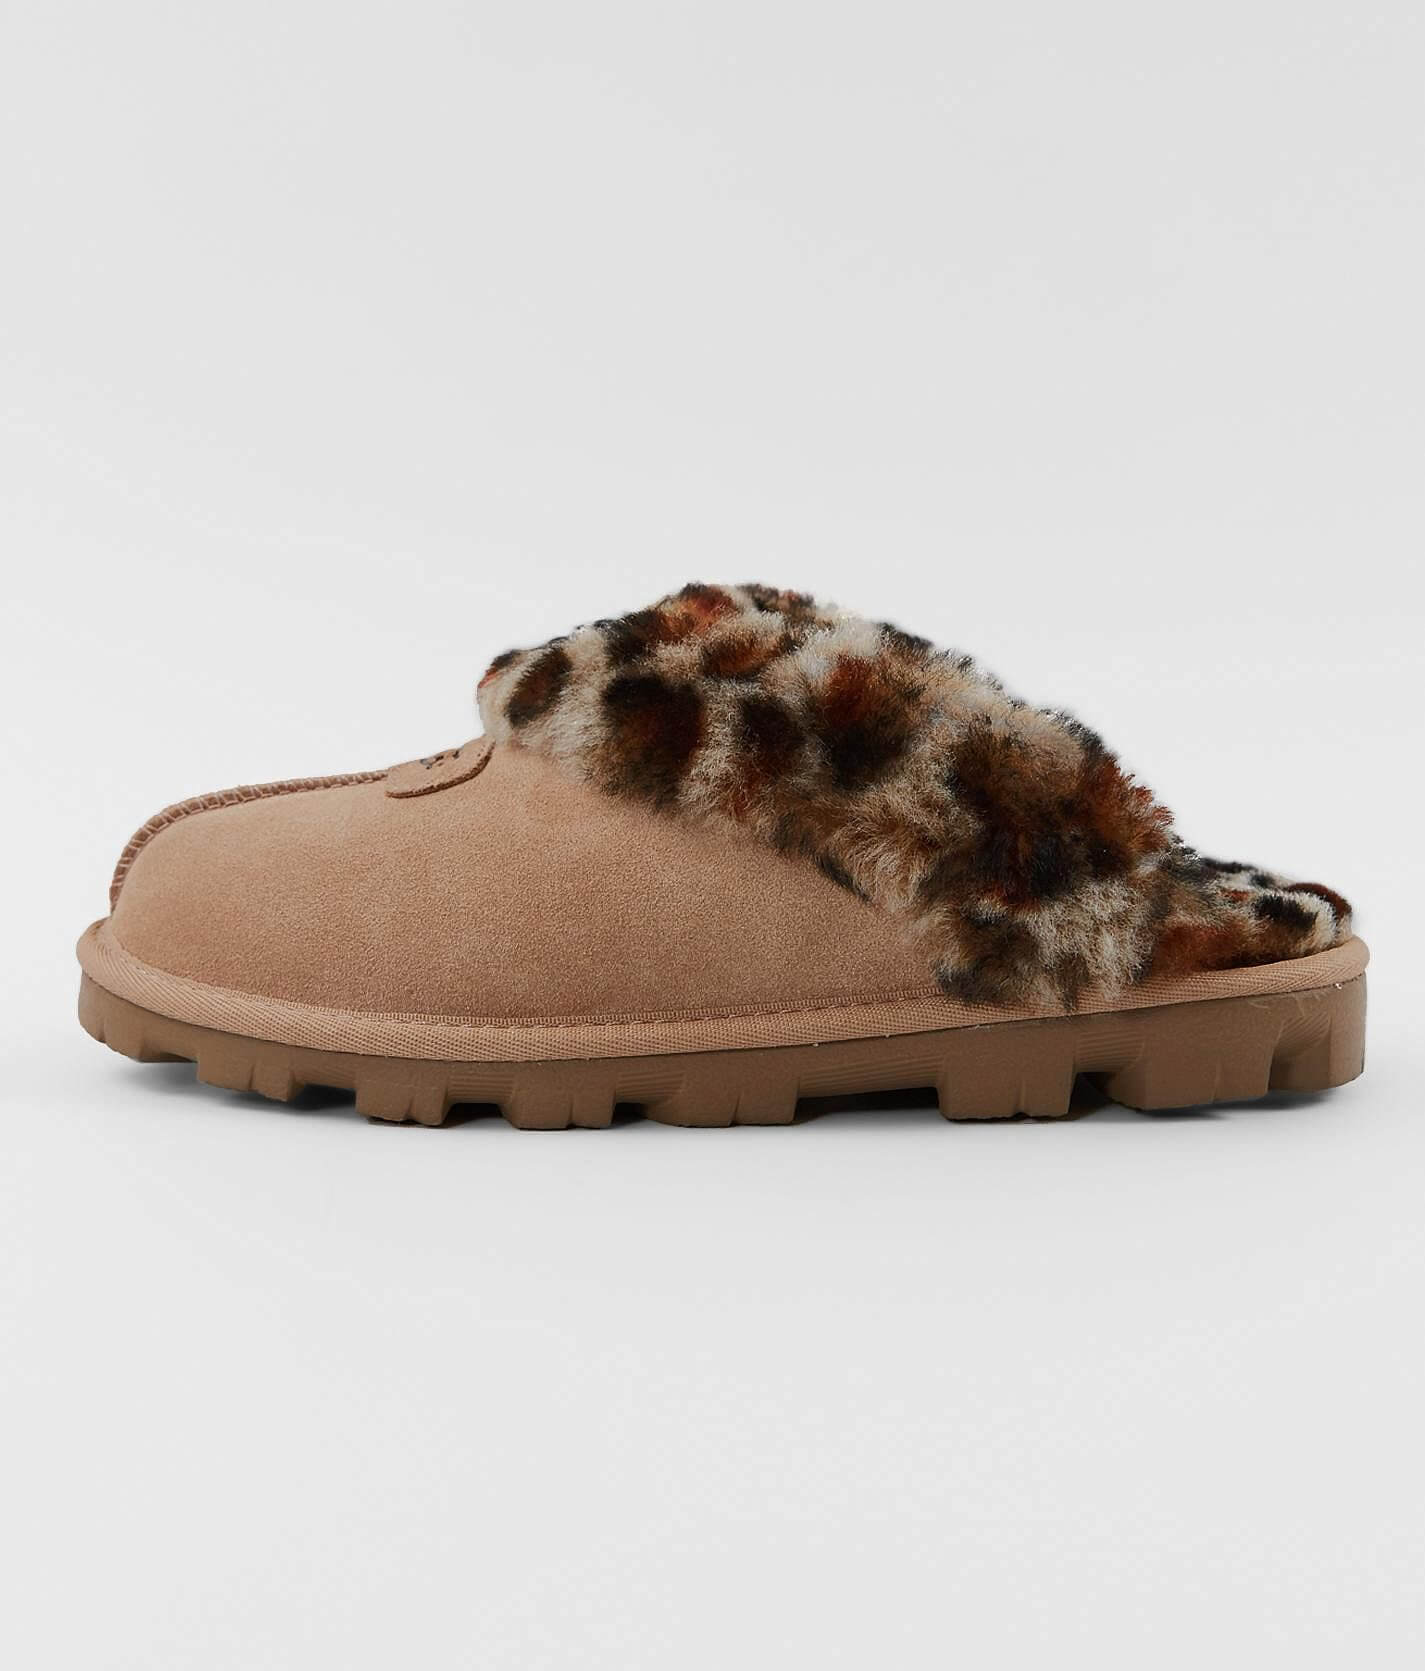 cheetah print ugg slippers